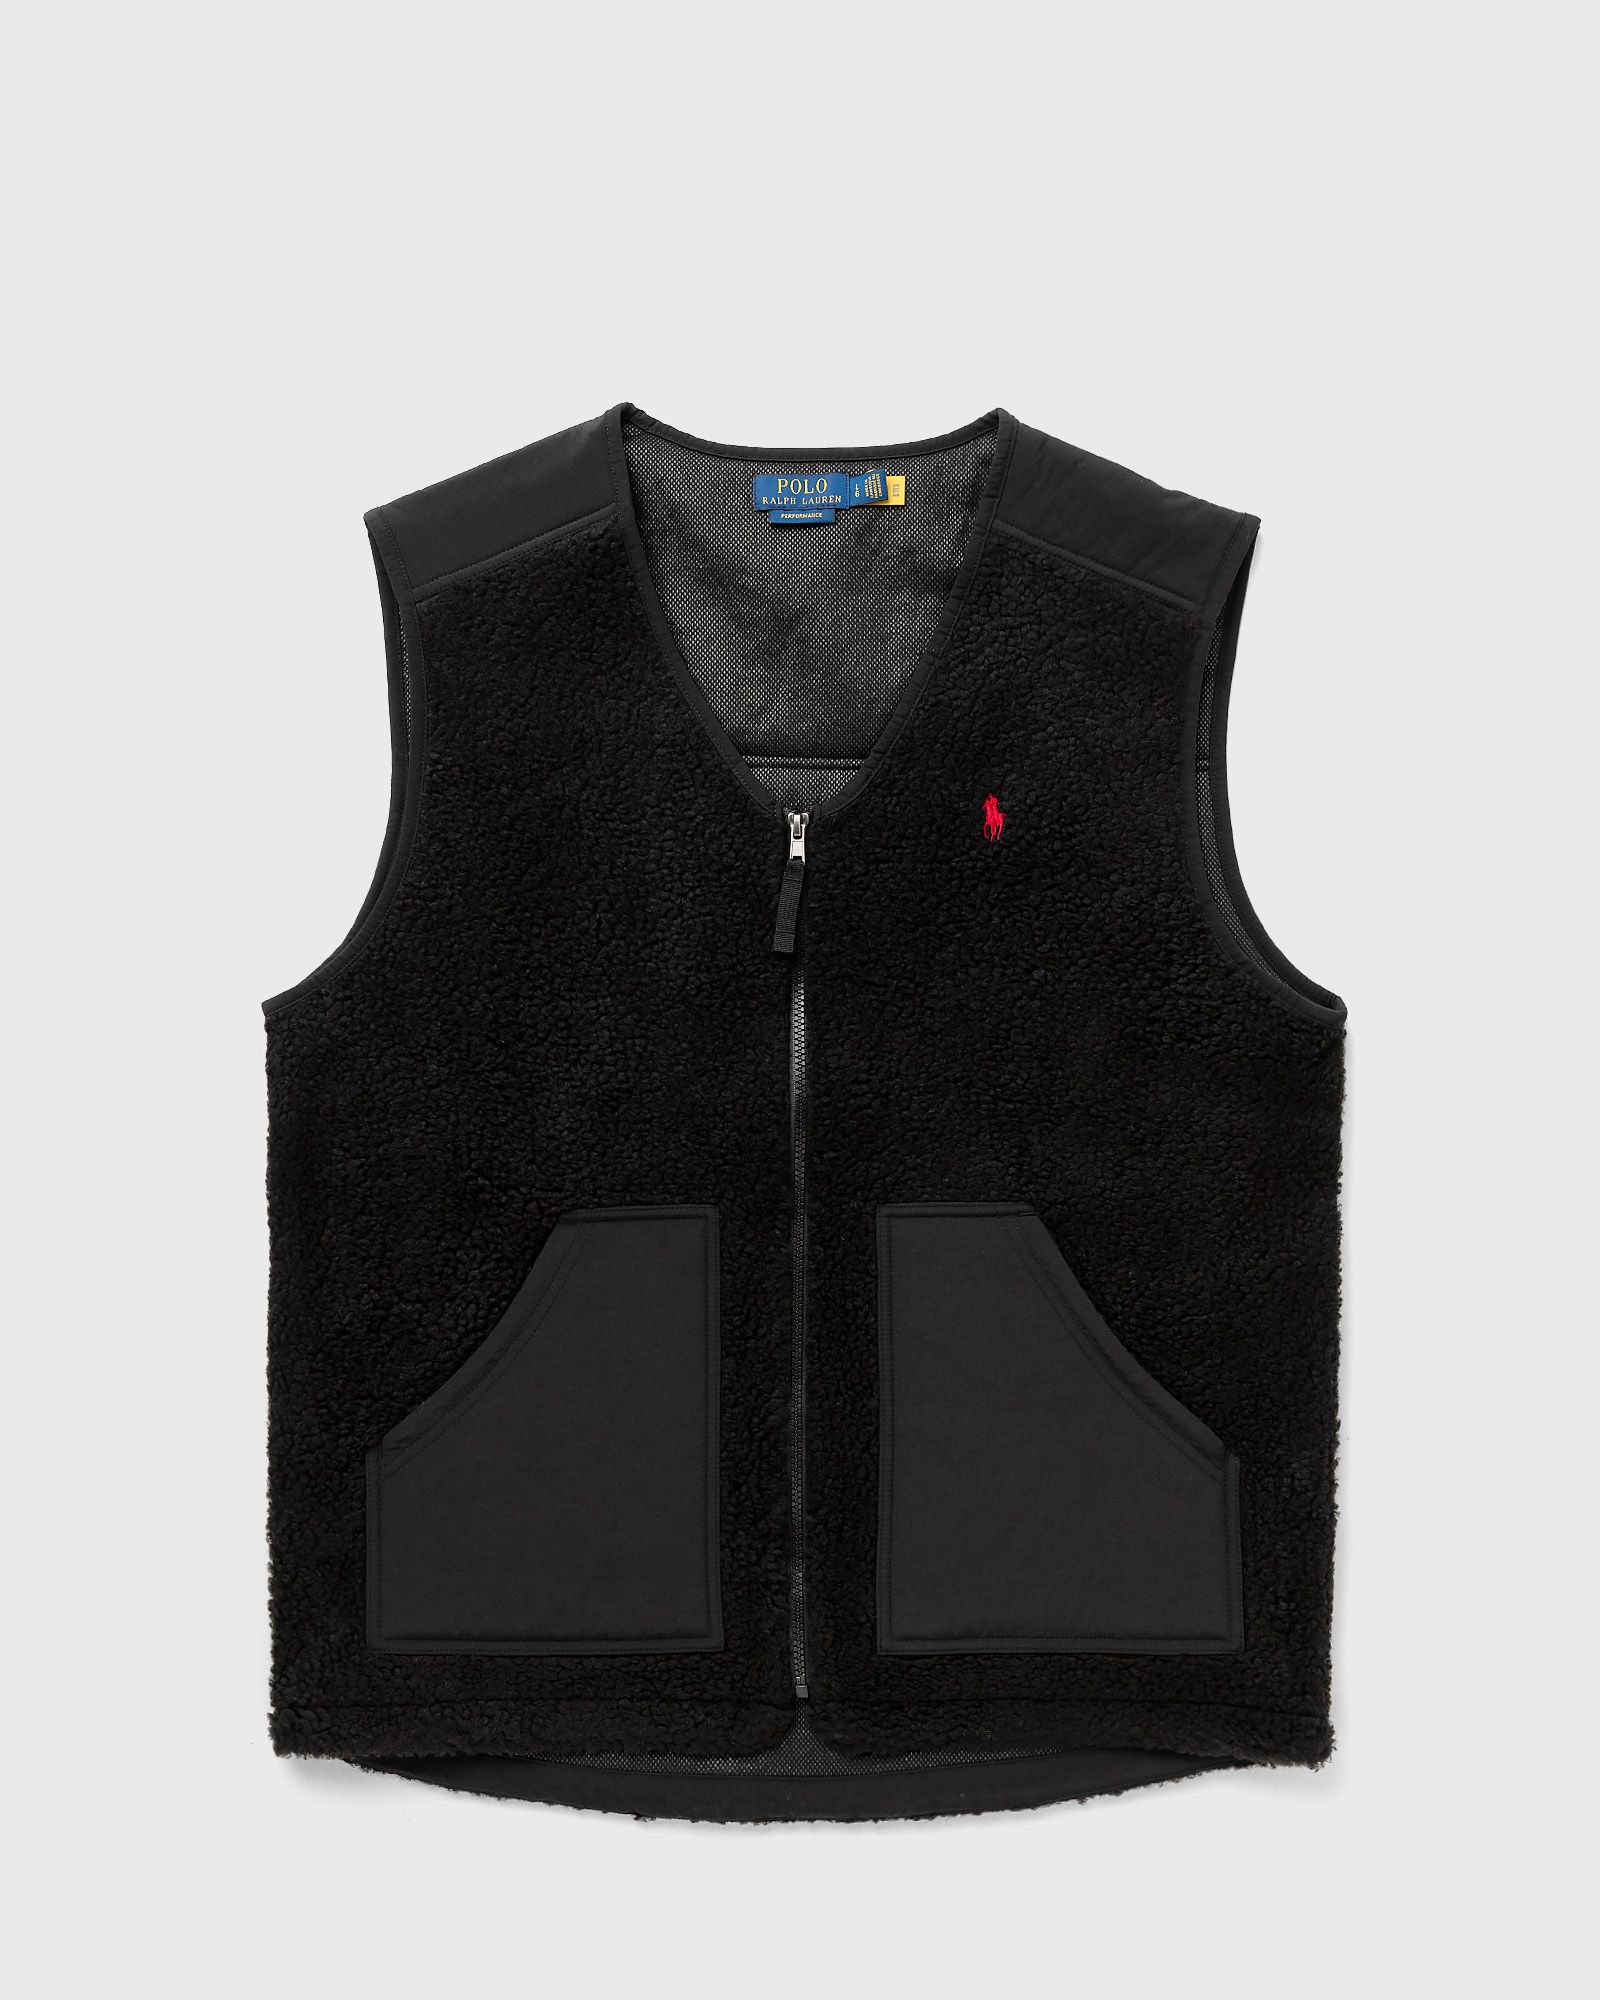 Polo Ralph Lauren - vest men vests black in größe:xxl